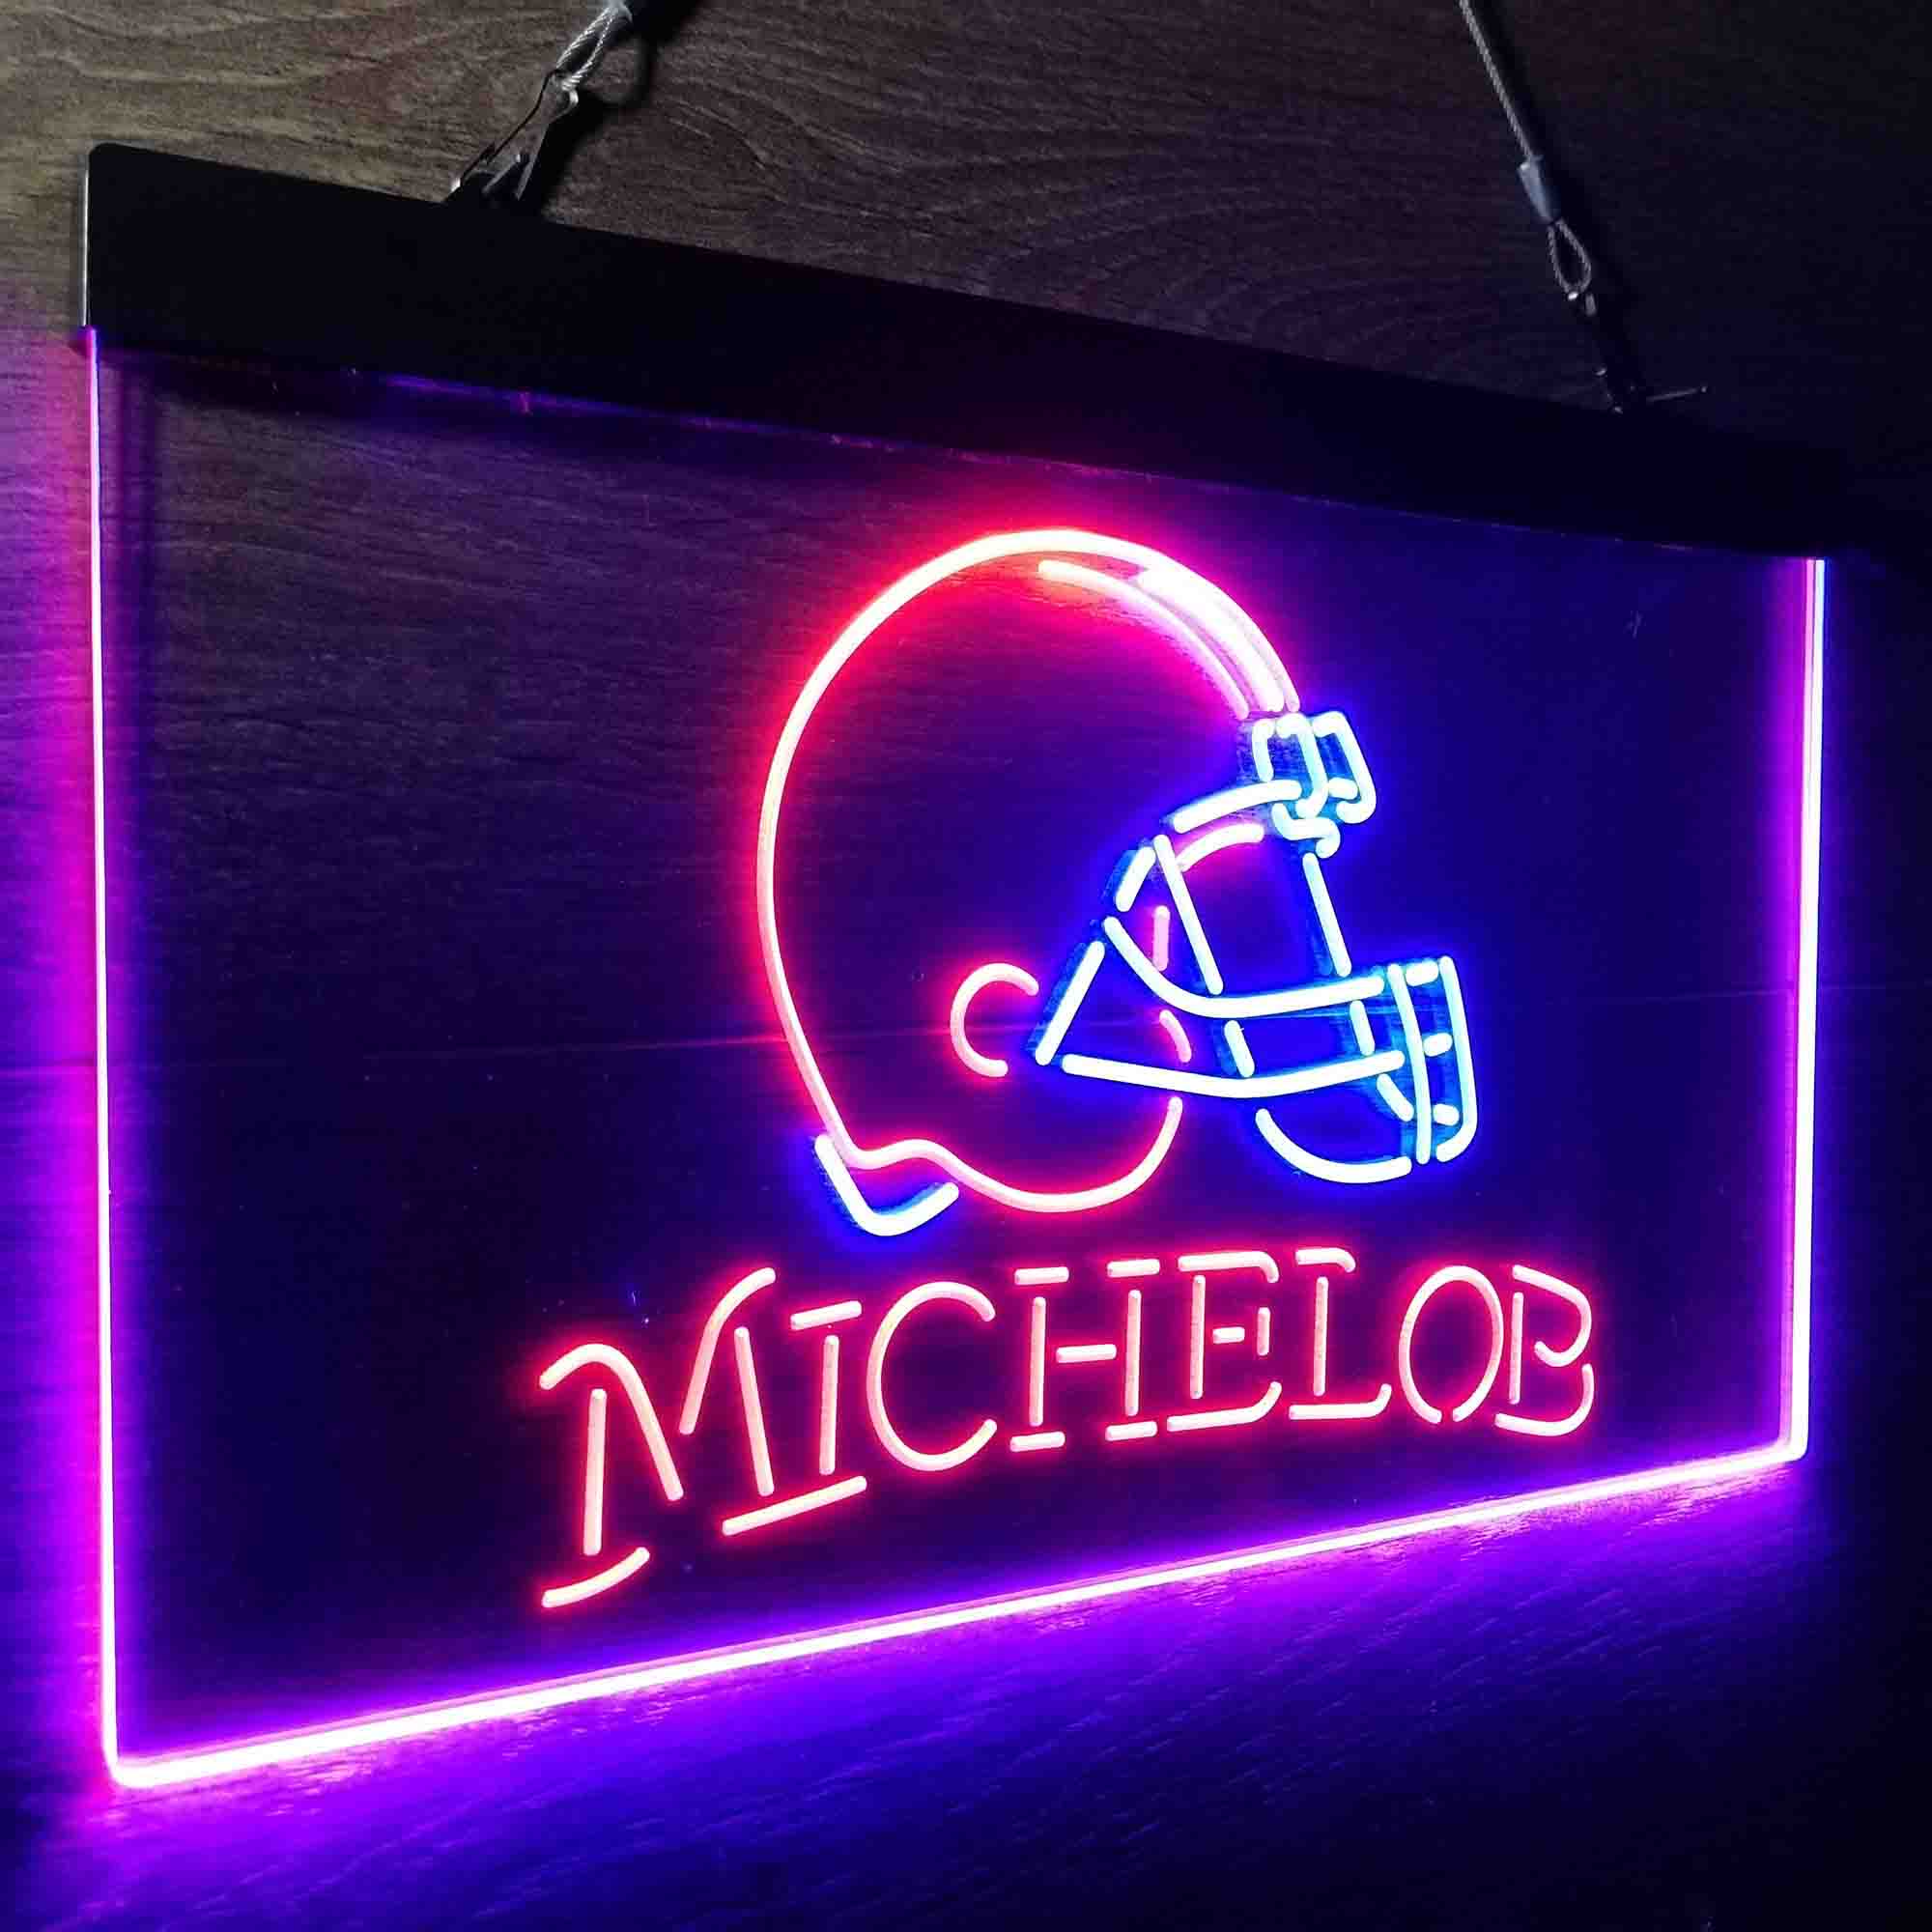 Michelob Bar Cleveland Browns Est. 1946 Neon-Like LED Sign